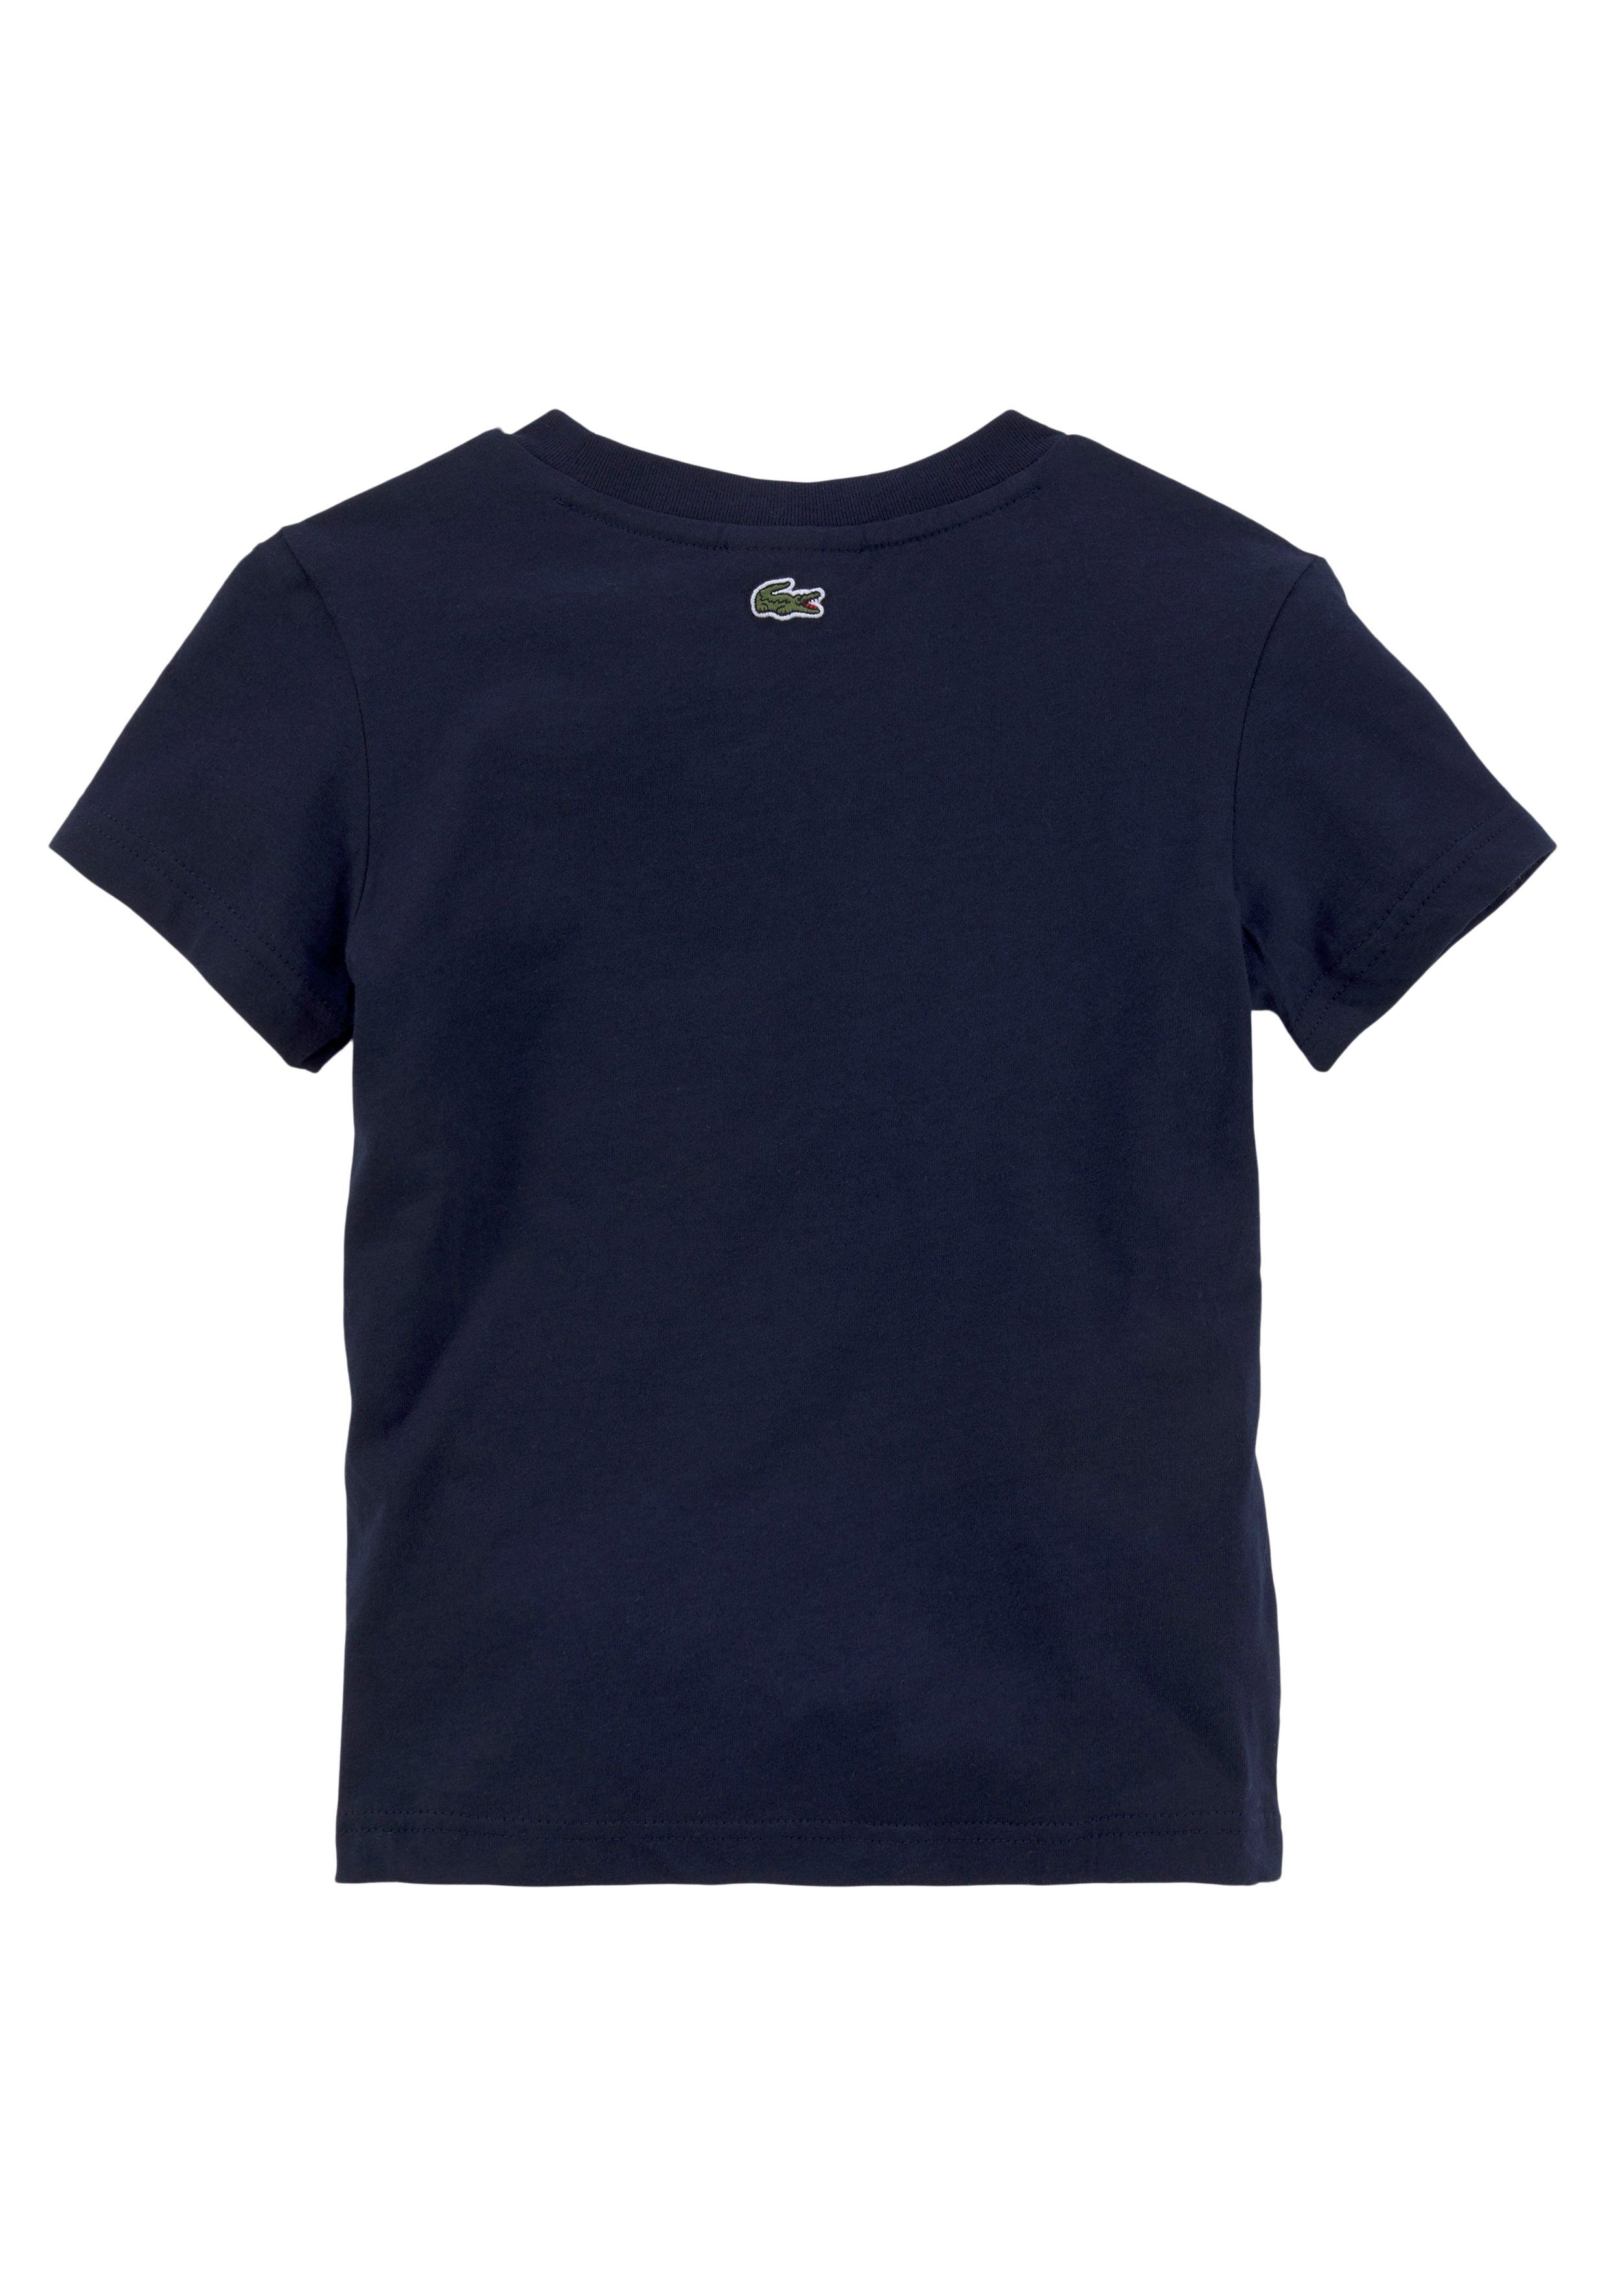 Lacoste T-Shirt navy großem Logodruck mit blue